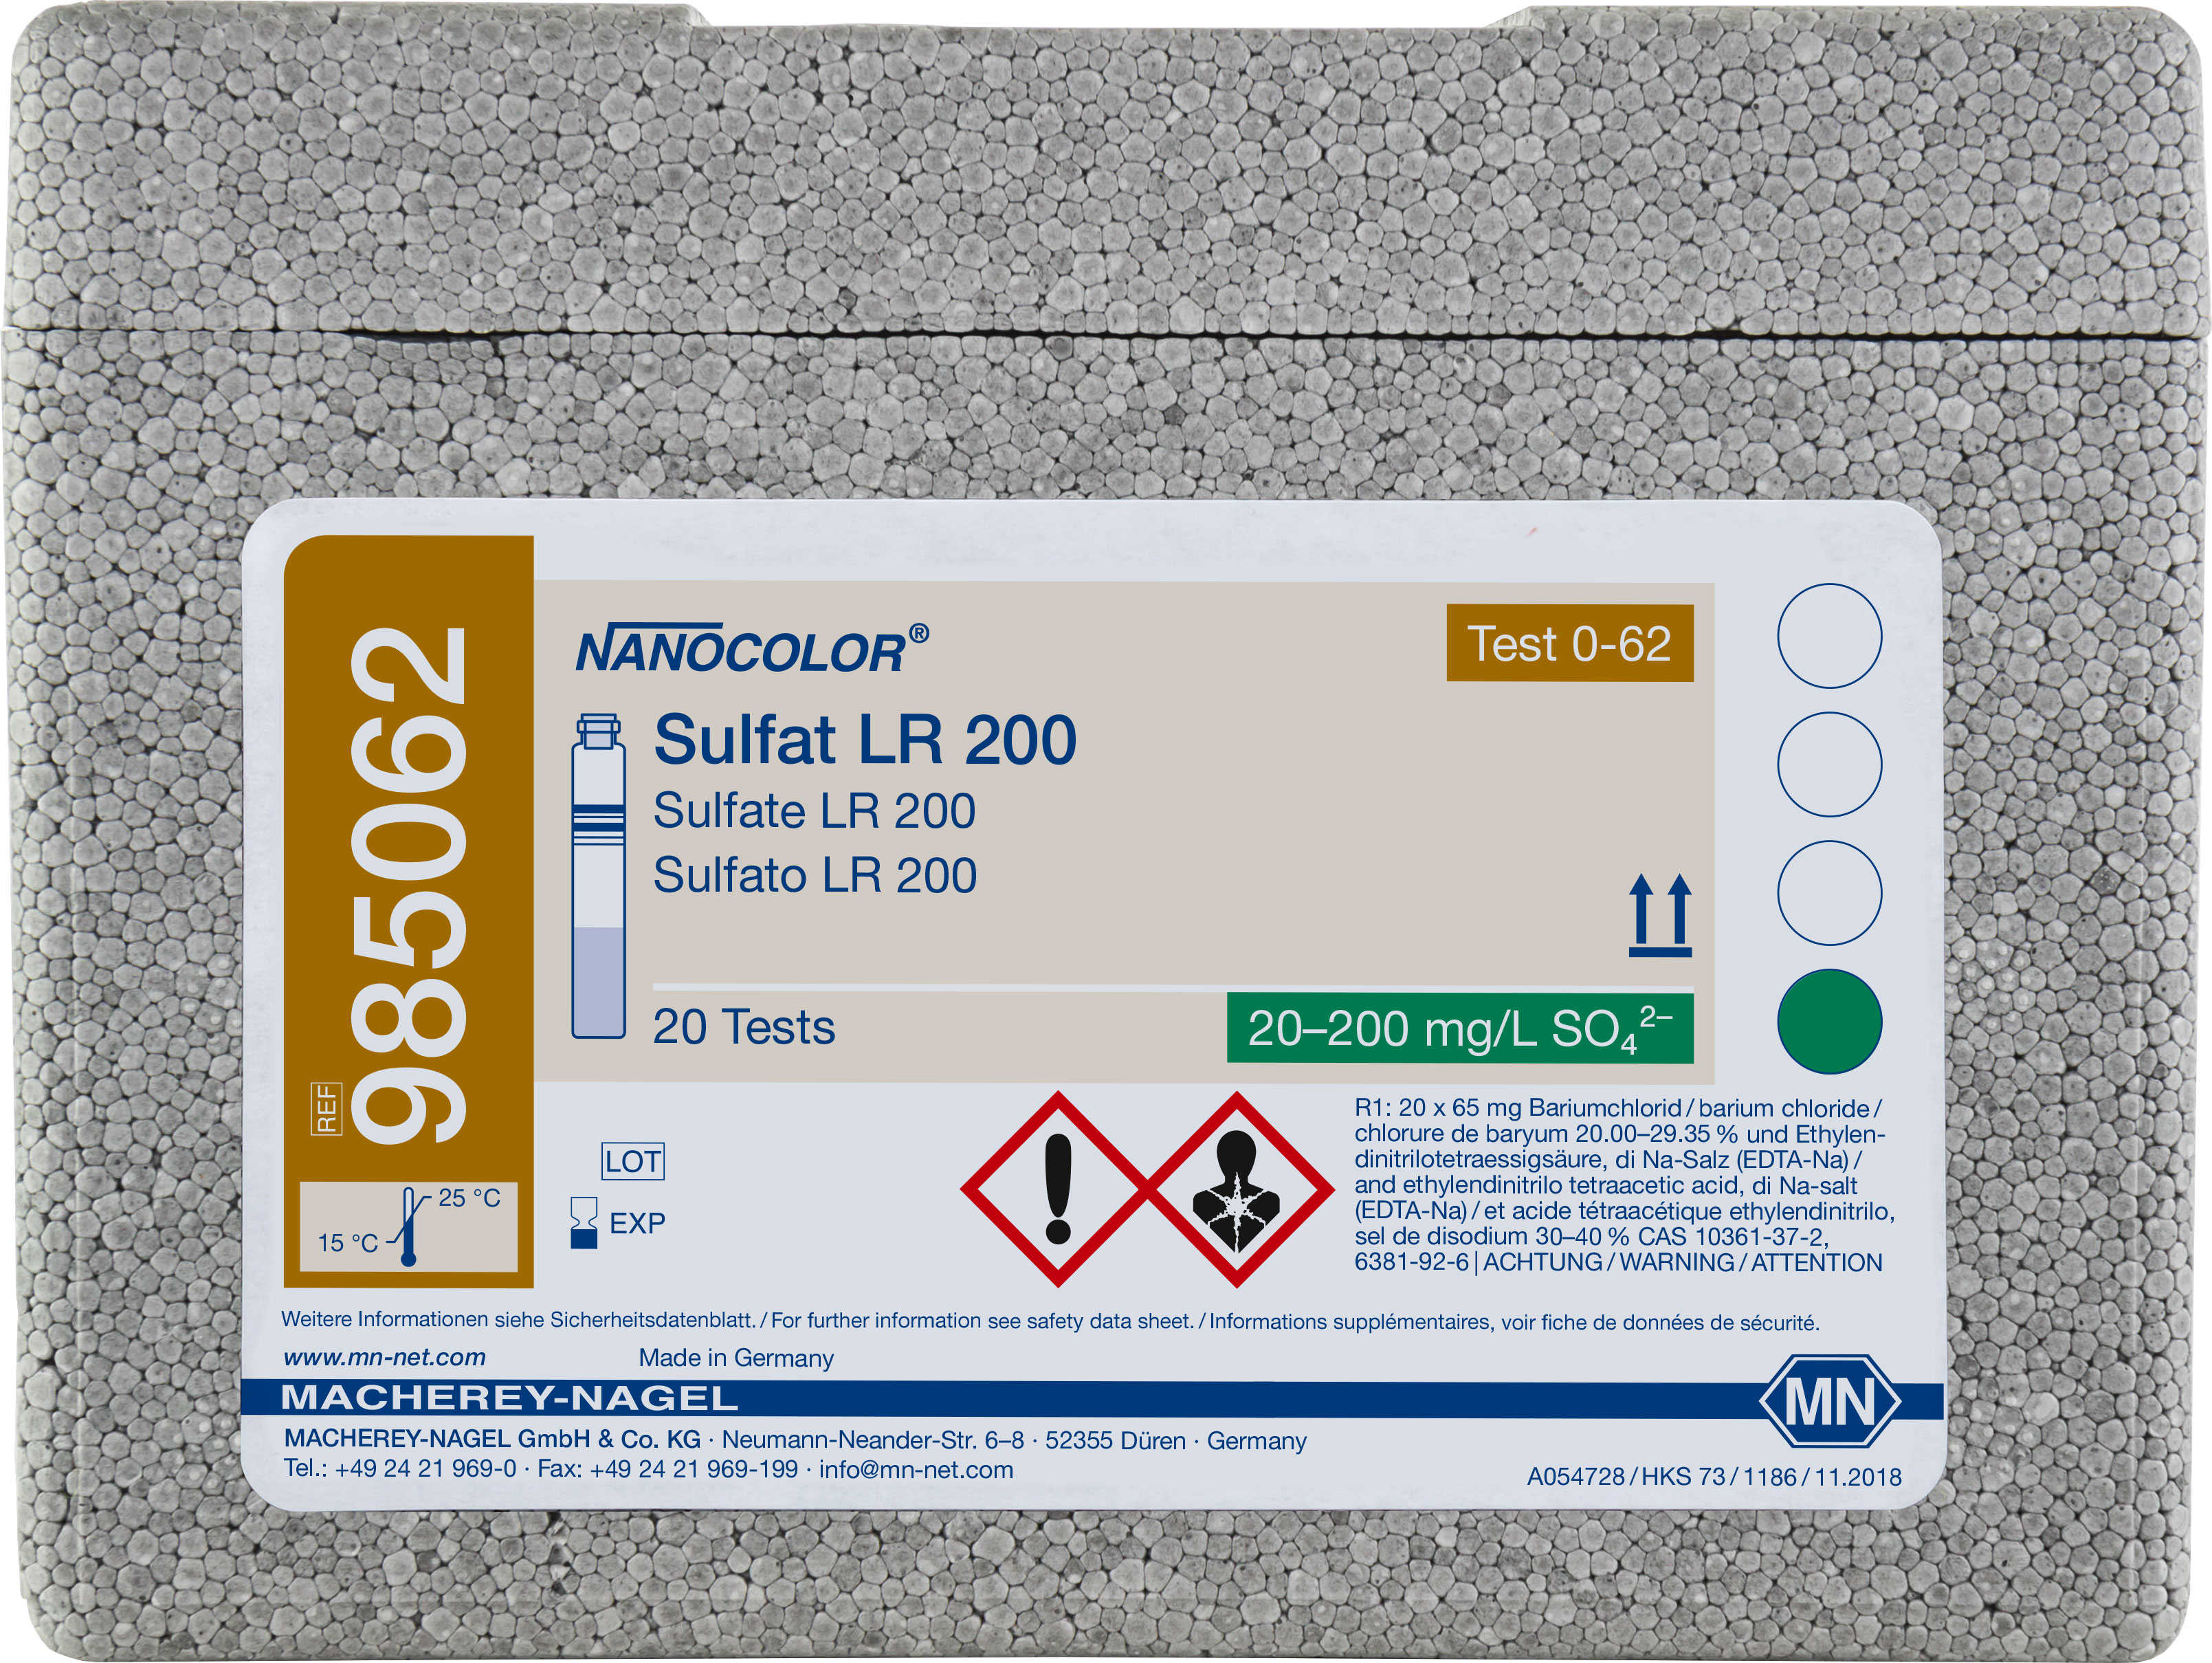 RUK NANOCOLOR-Sulfat LR 200